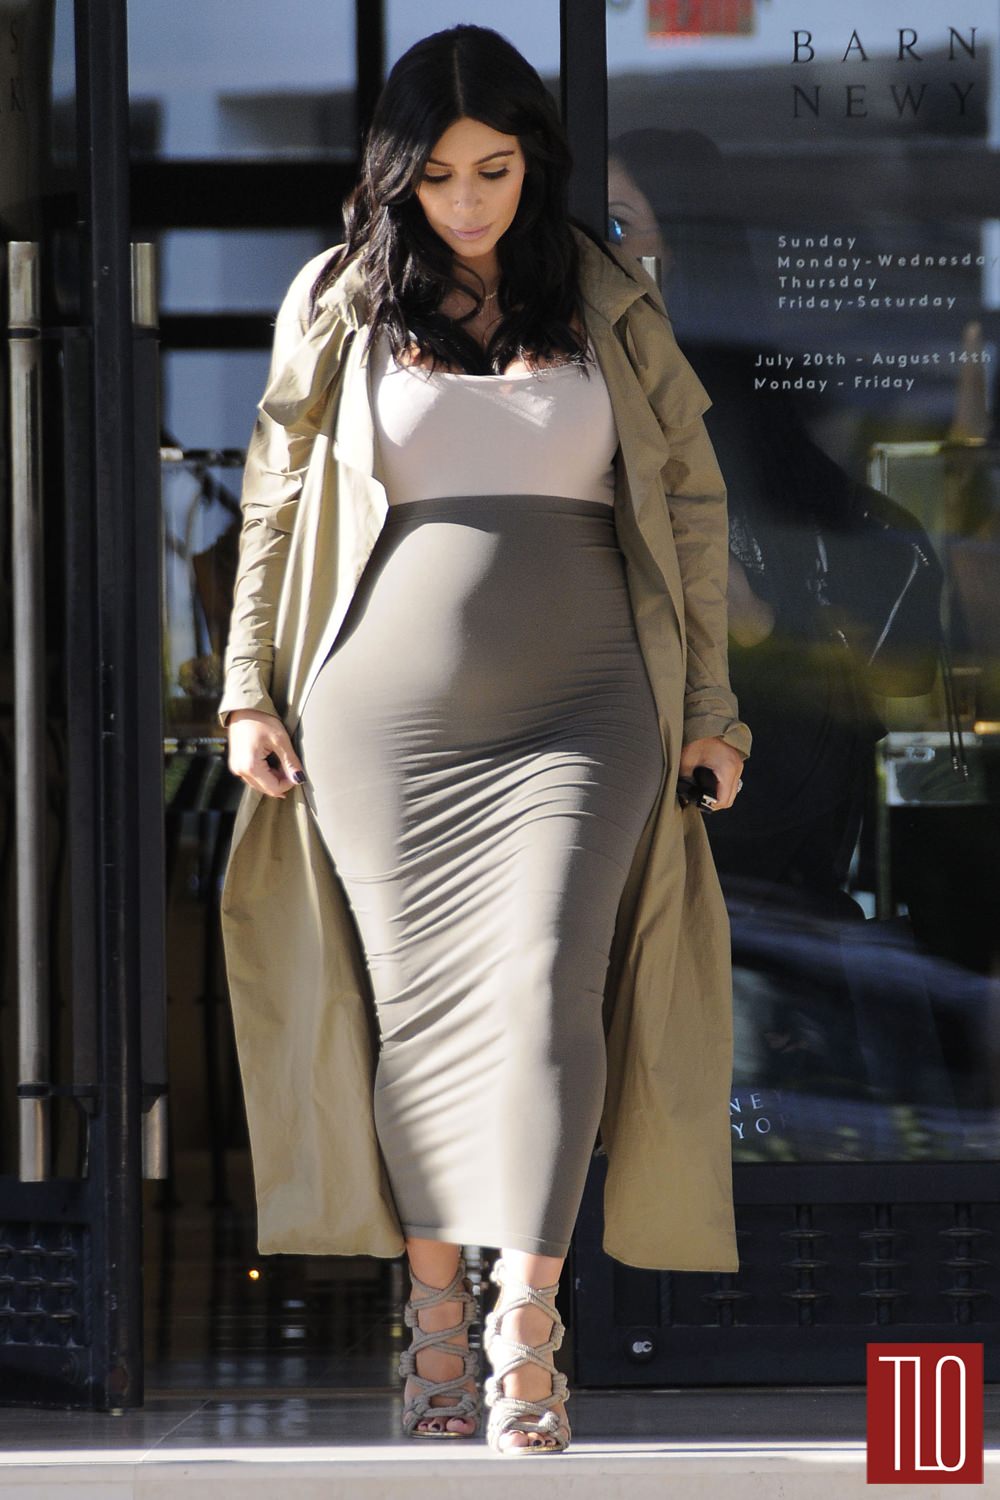 Kim-Kardashian-GOTSLA-Barneys-Street-Style-Tom-Lorenzo-Site-TLO (1)